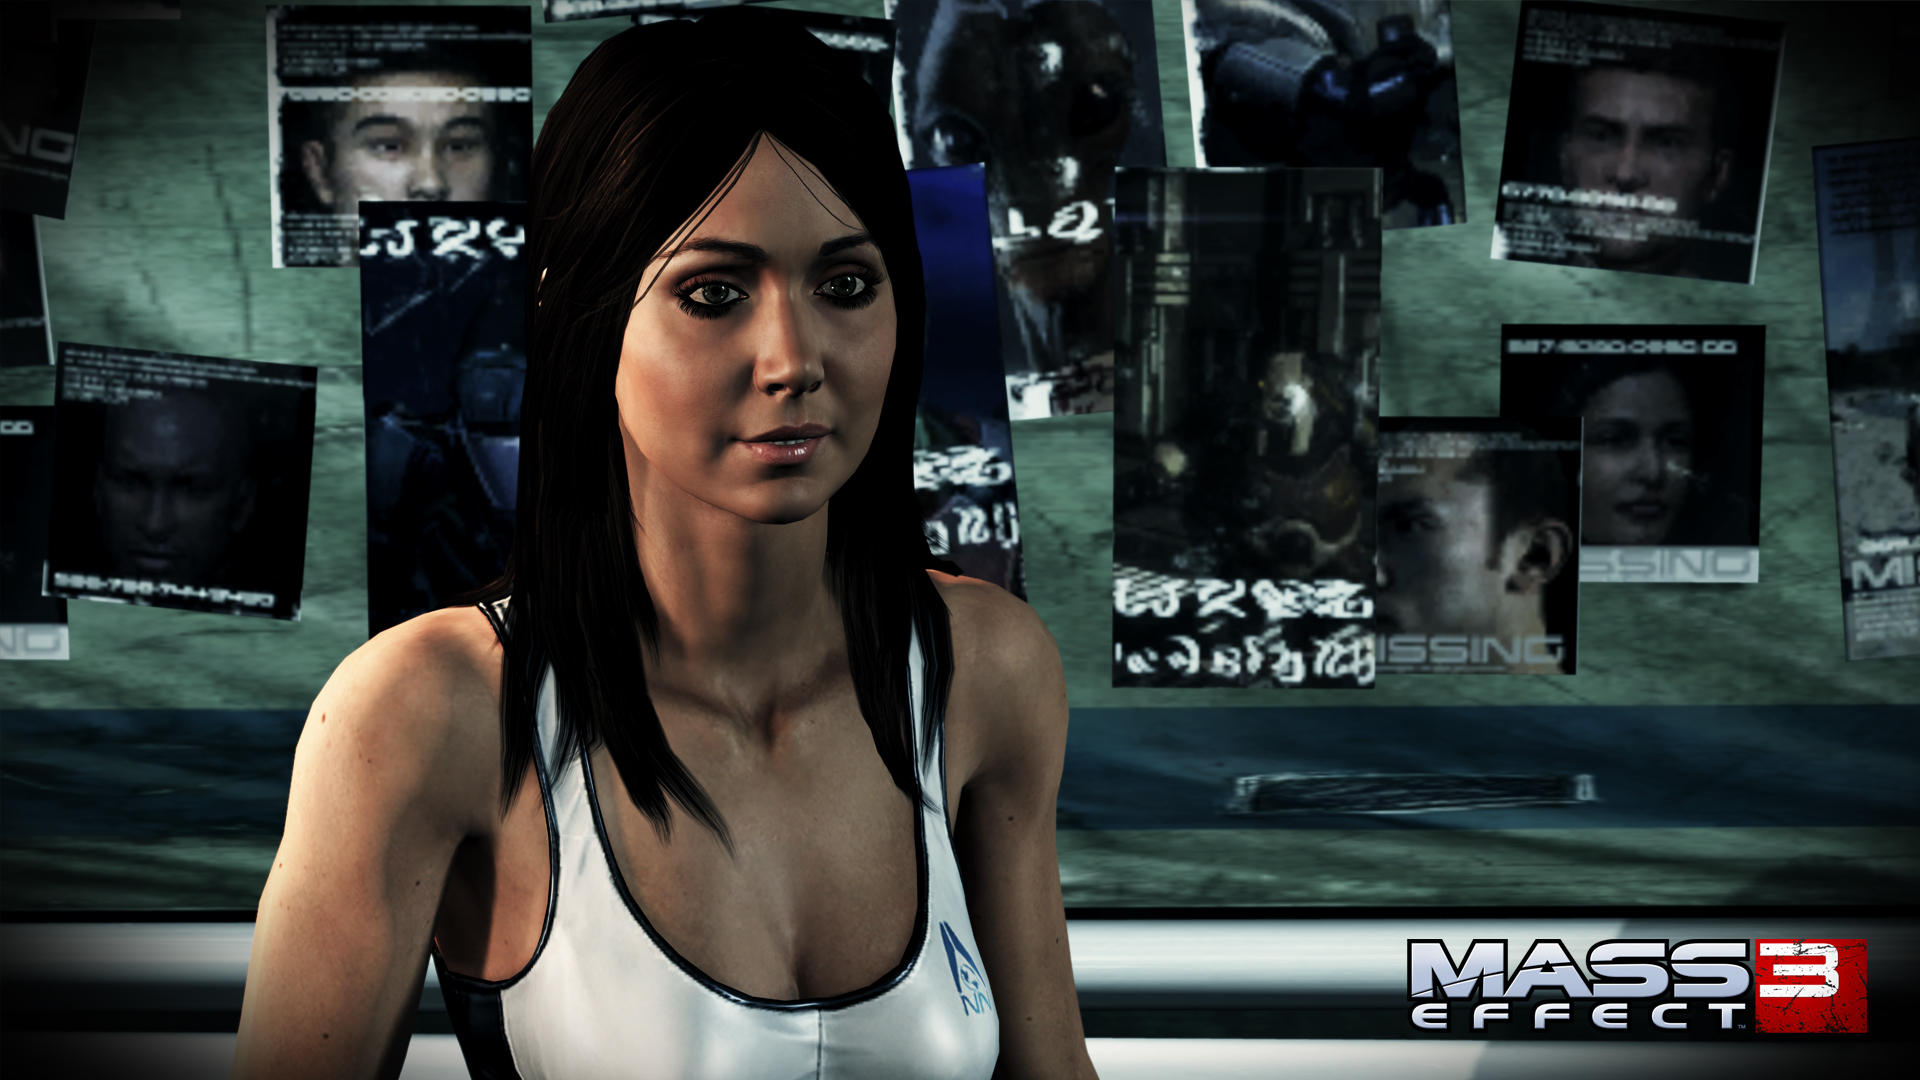 Mass Effect 3, Electronic Arts - Xbox 360 - image 3 of 22